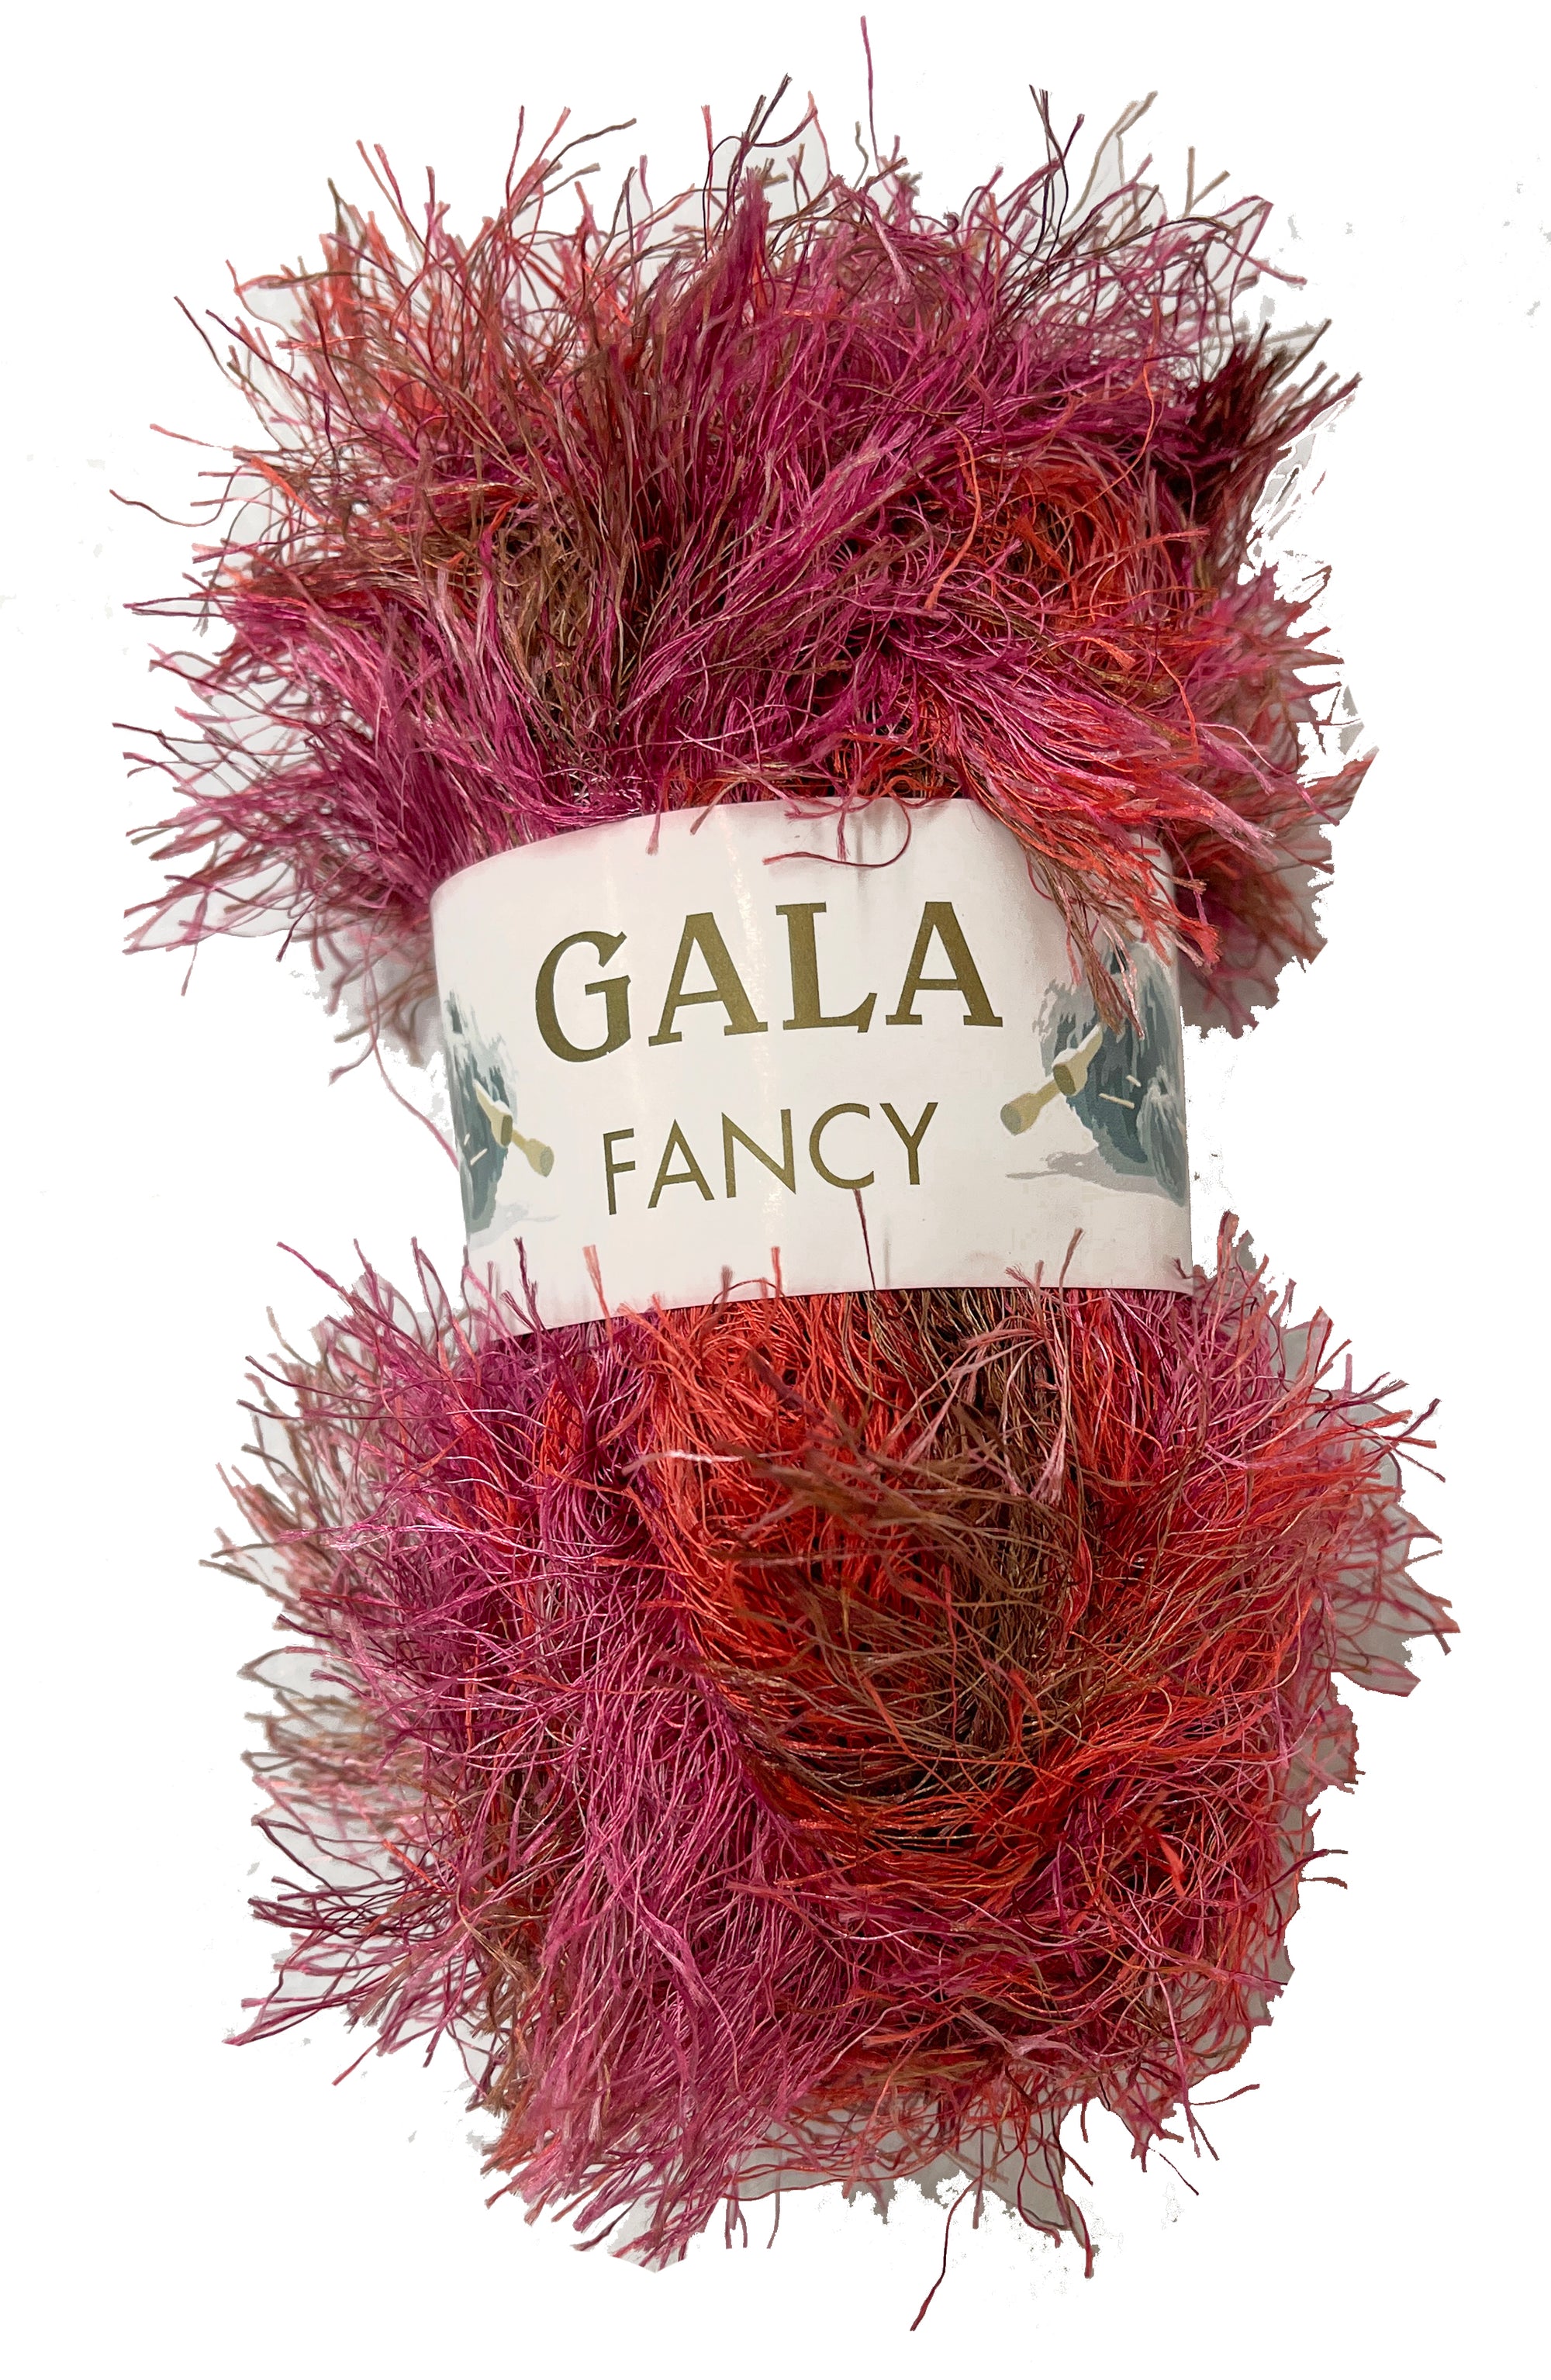 Gala Fancy Multicolor Eyelash Fur Yarn Pinks/Reds